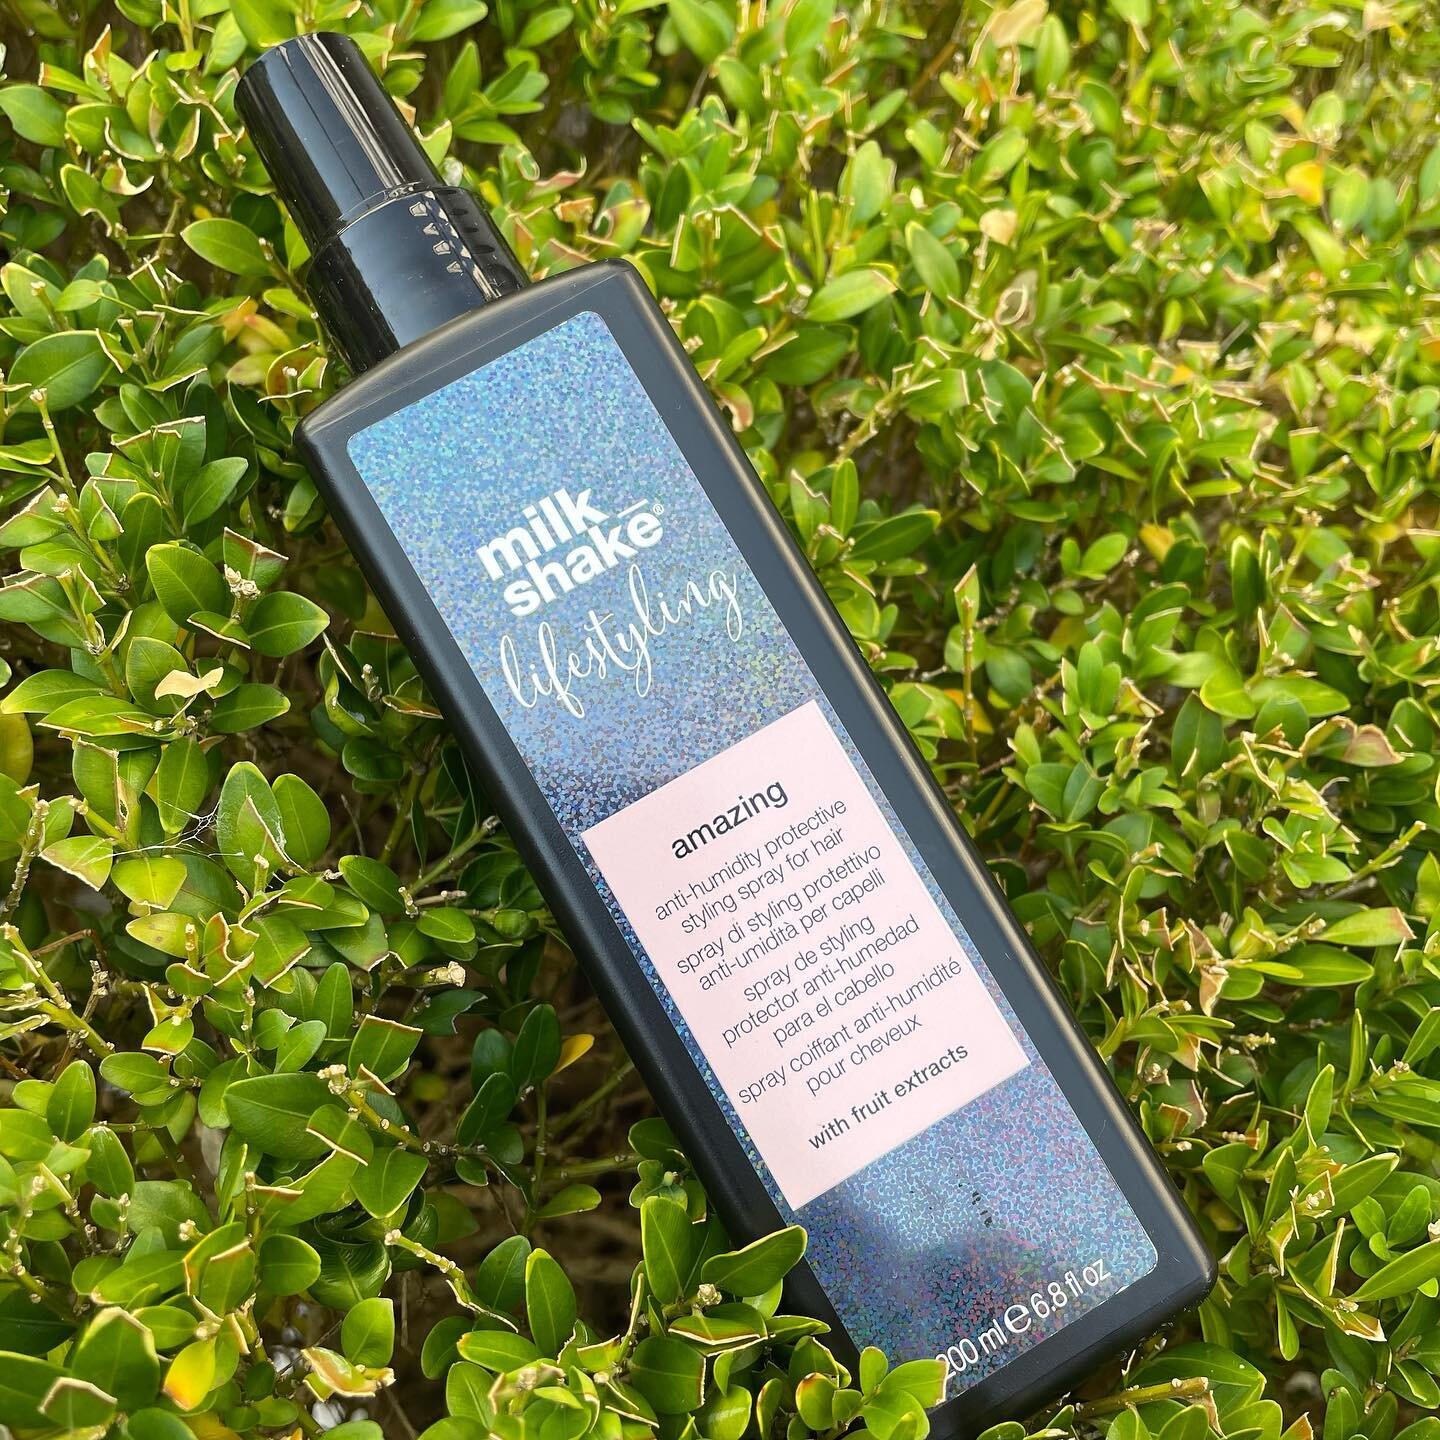 ⭐️A-M-A-Z-I-N-G⭐️
We are obsessed with this anti-humity spray 😍
Now back in stock! @milkshakehairuk 

#milkshakehair #antihumidityspray #maxinporcaro #summerhair #haircontrol #smoothhair #shoplocal